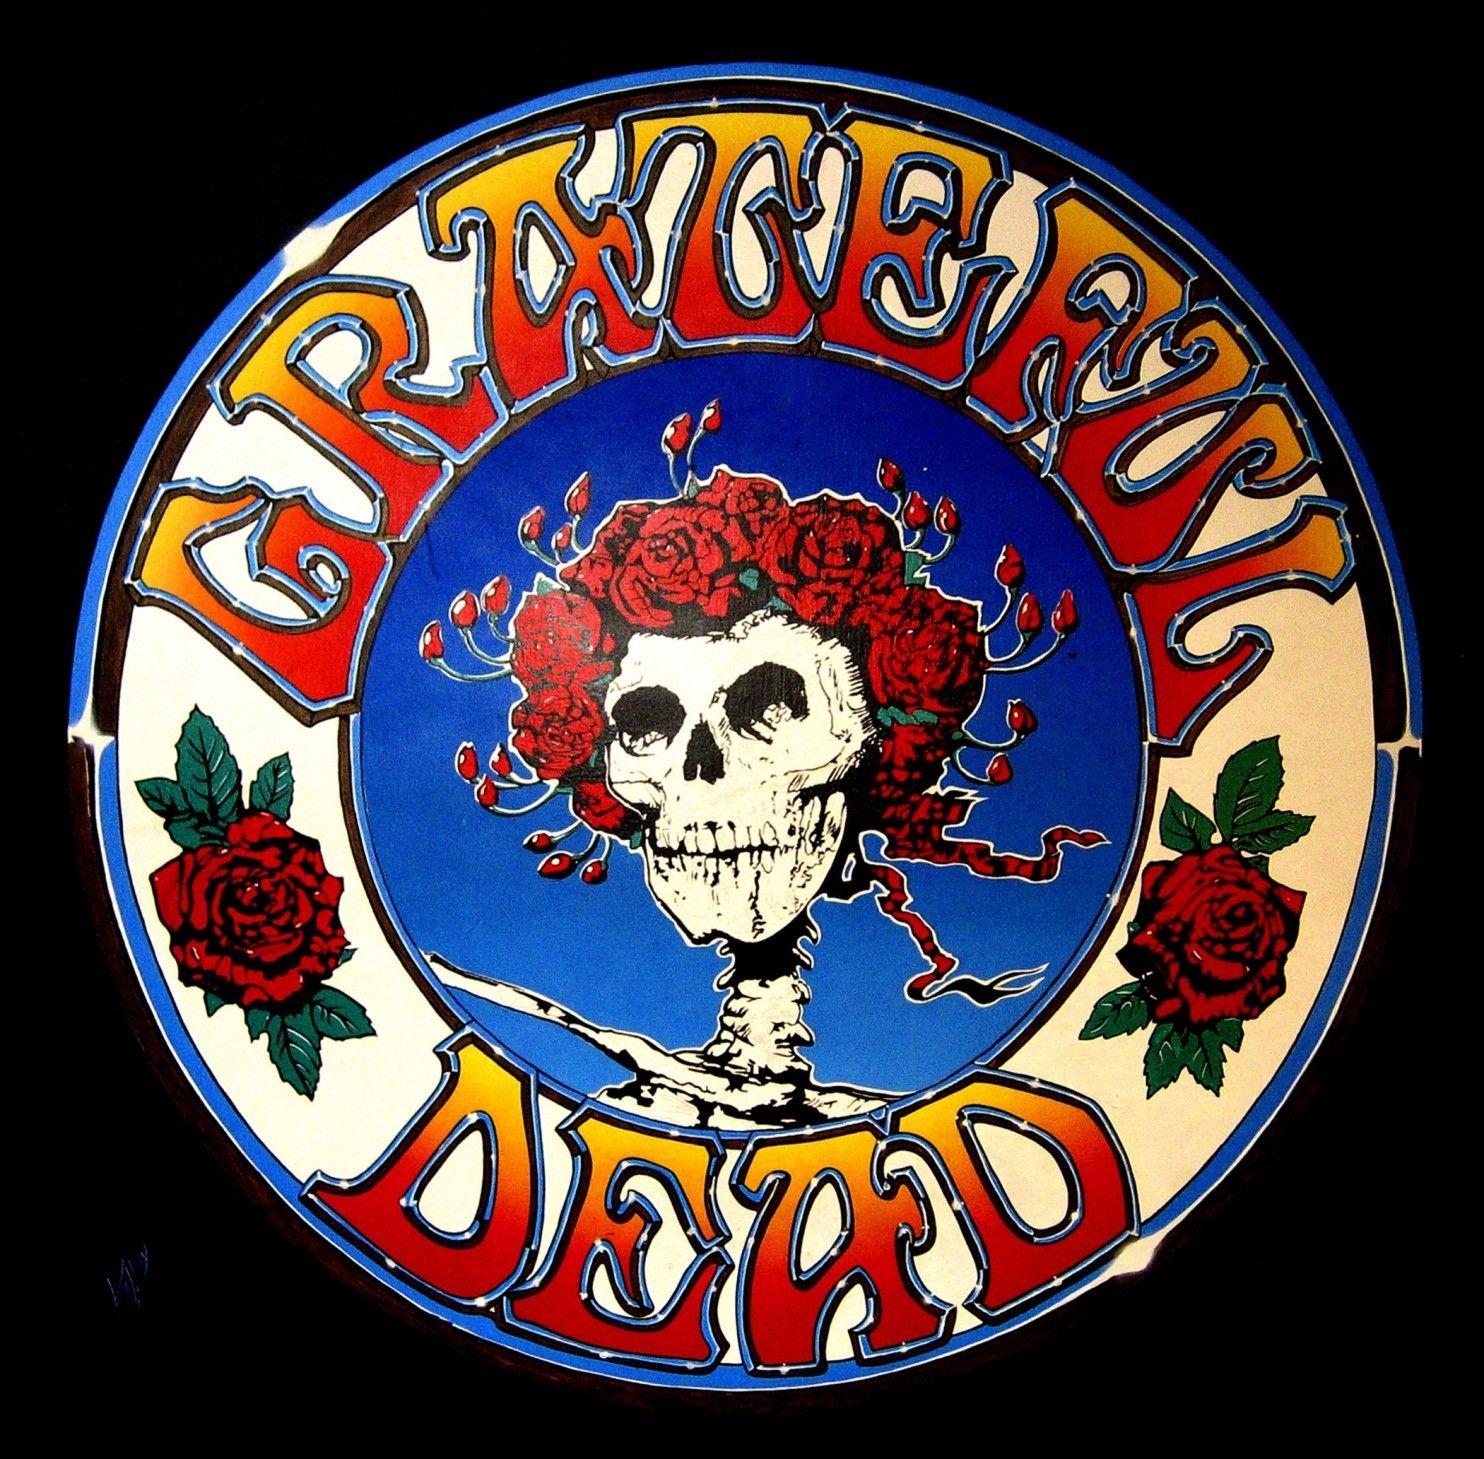 Grateful Dead Band Logo - Raising The Dead | WHCP Community Radio